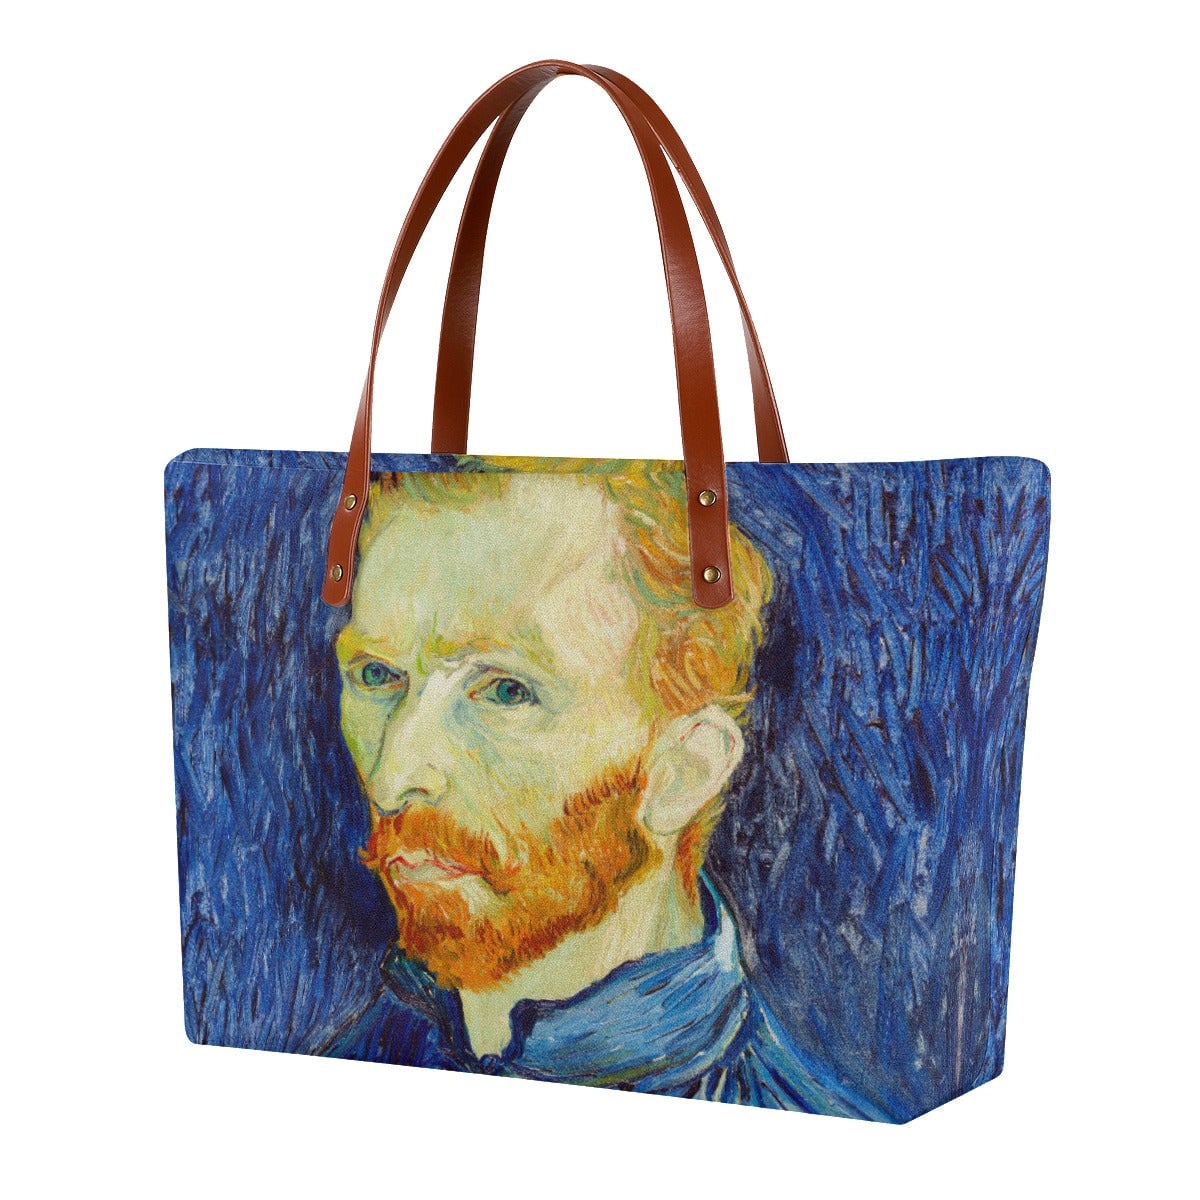 Self-Portrait from 1889 by Van Gogh Tote Bag